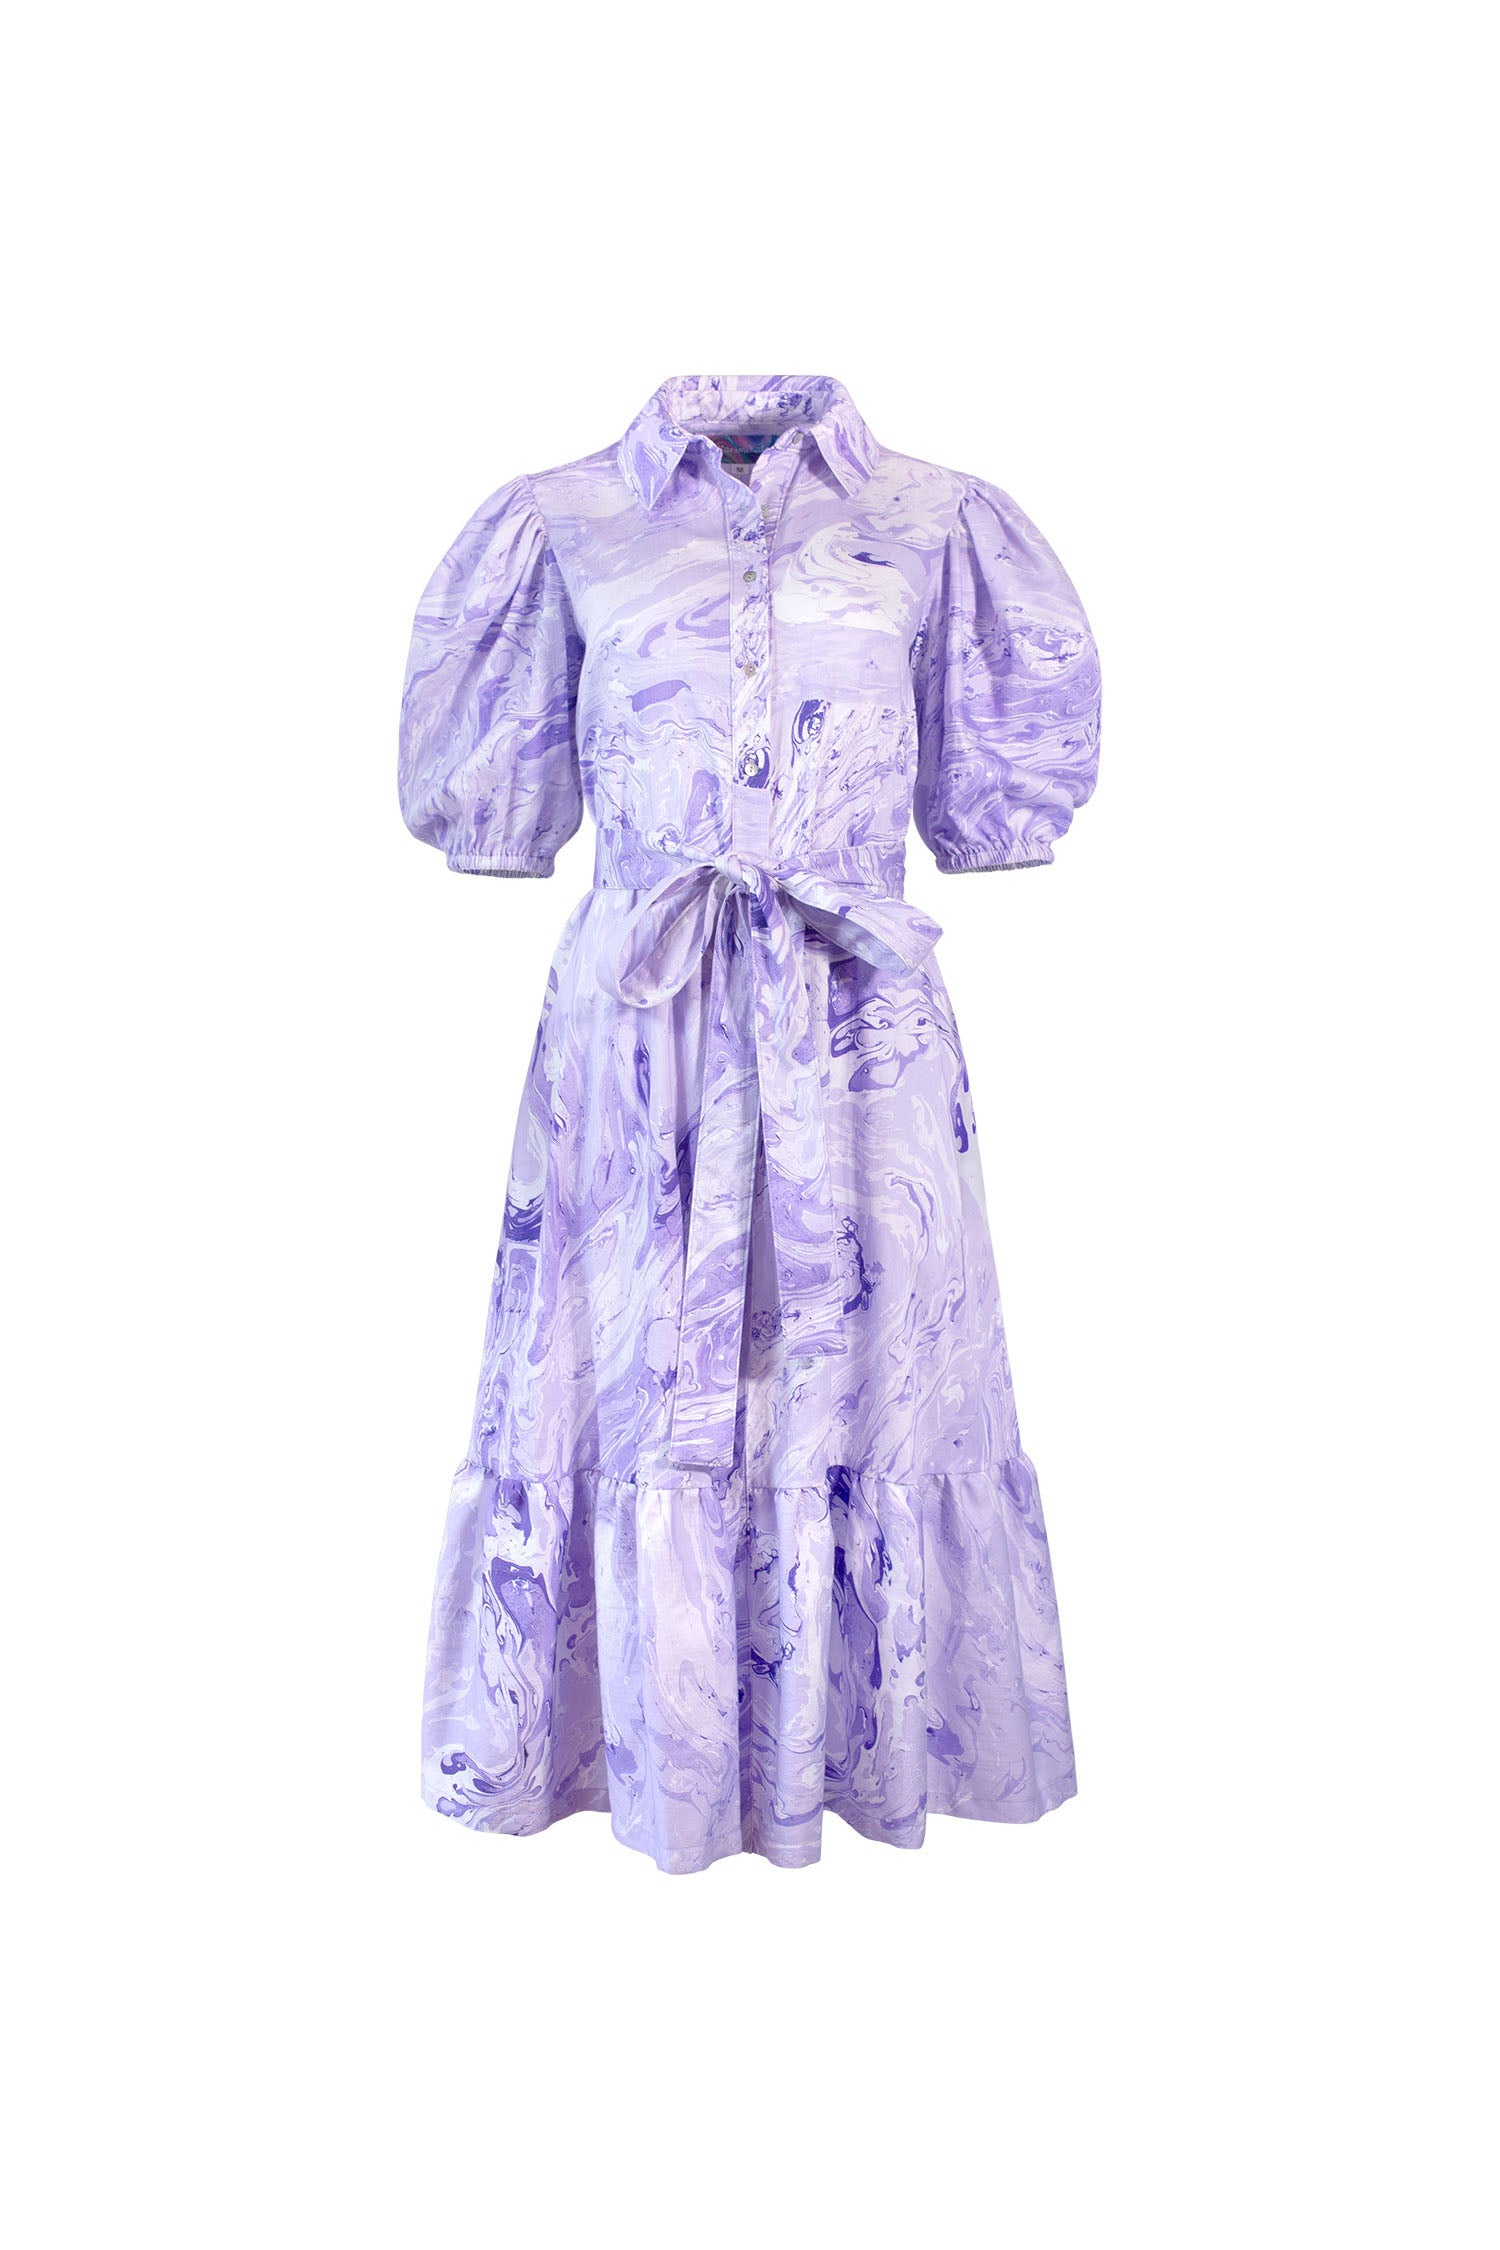 Valli shirt dress - lilac marble